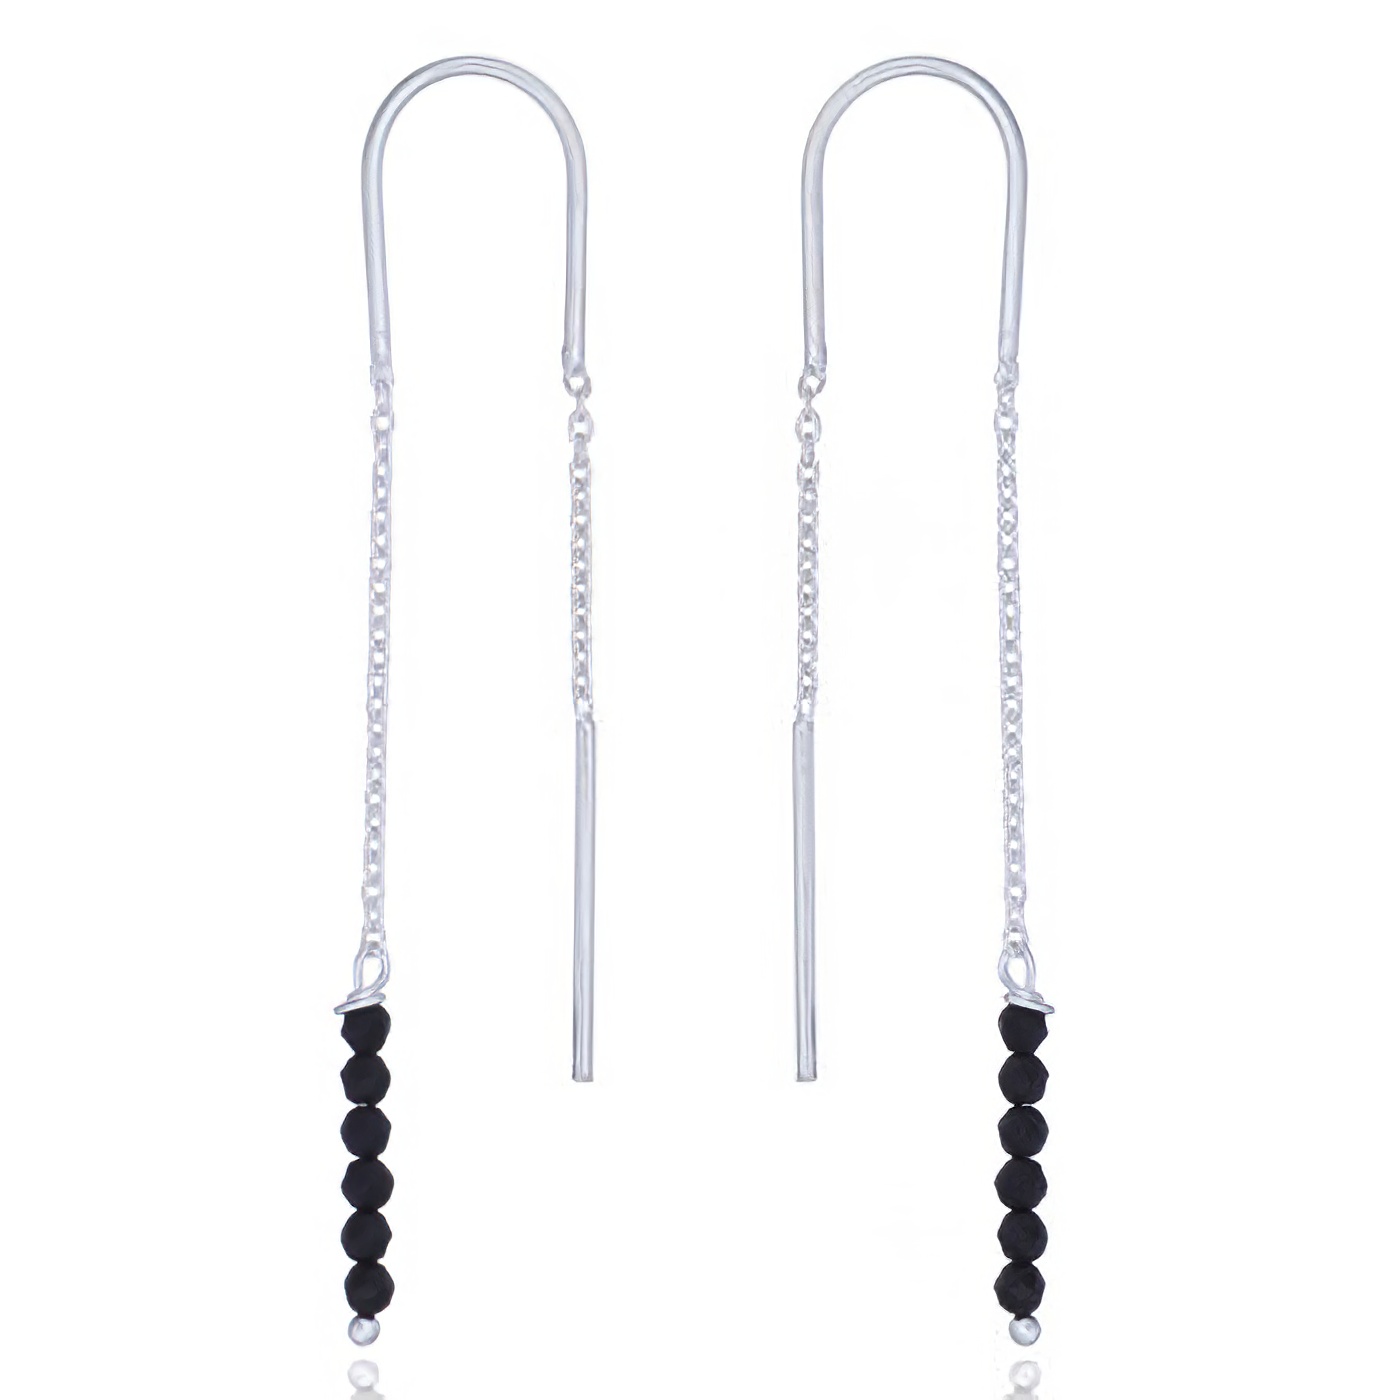 Black Agate Beads Silver Chain Thread Earrings by BeYindi 